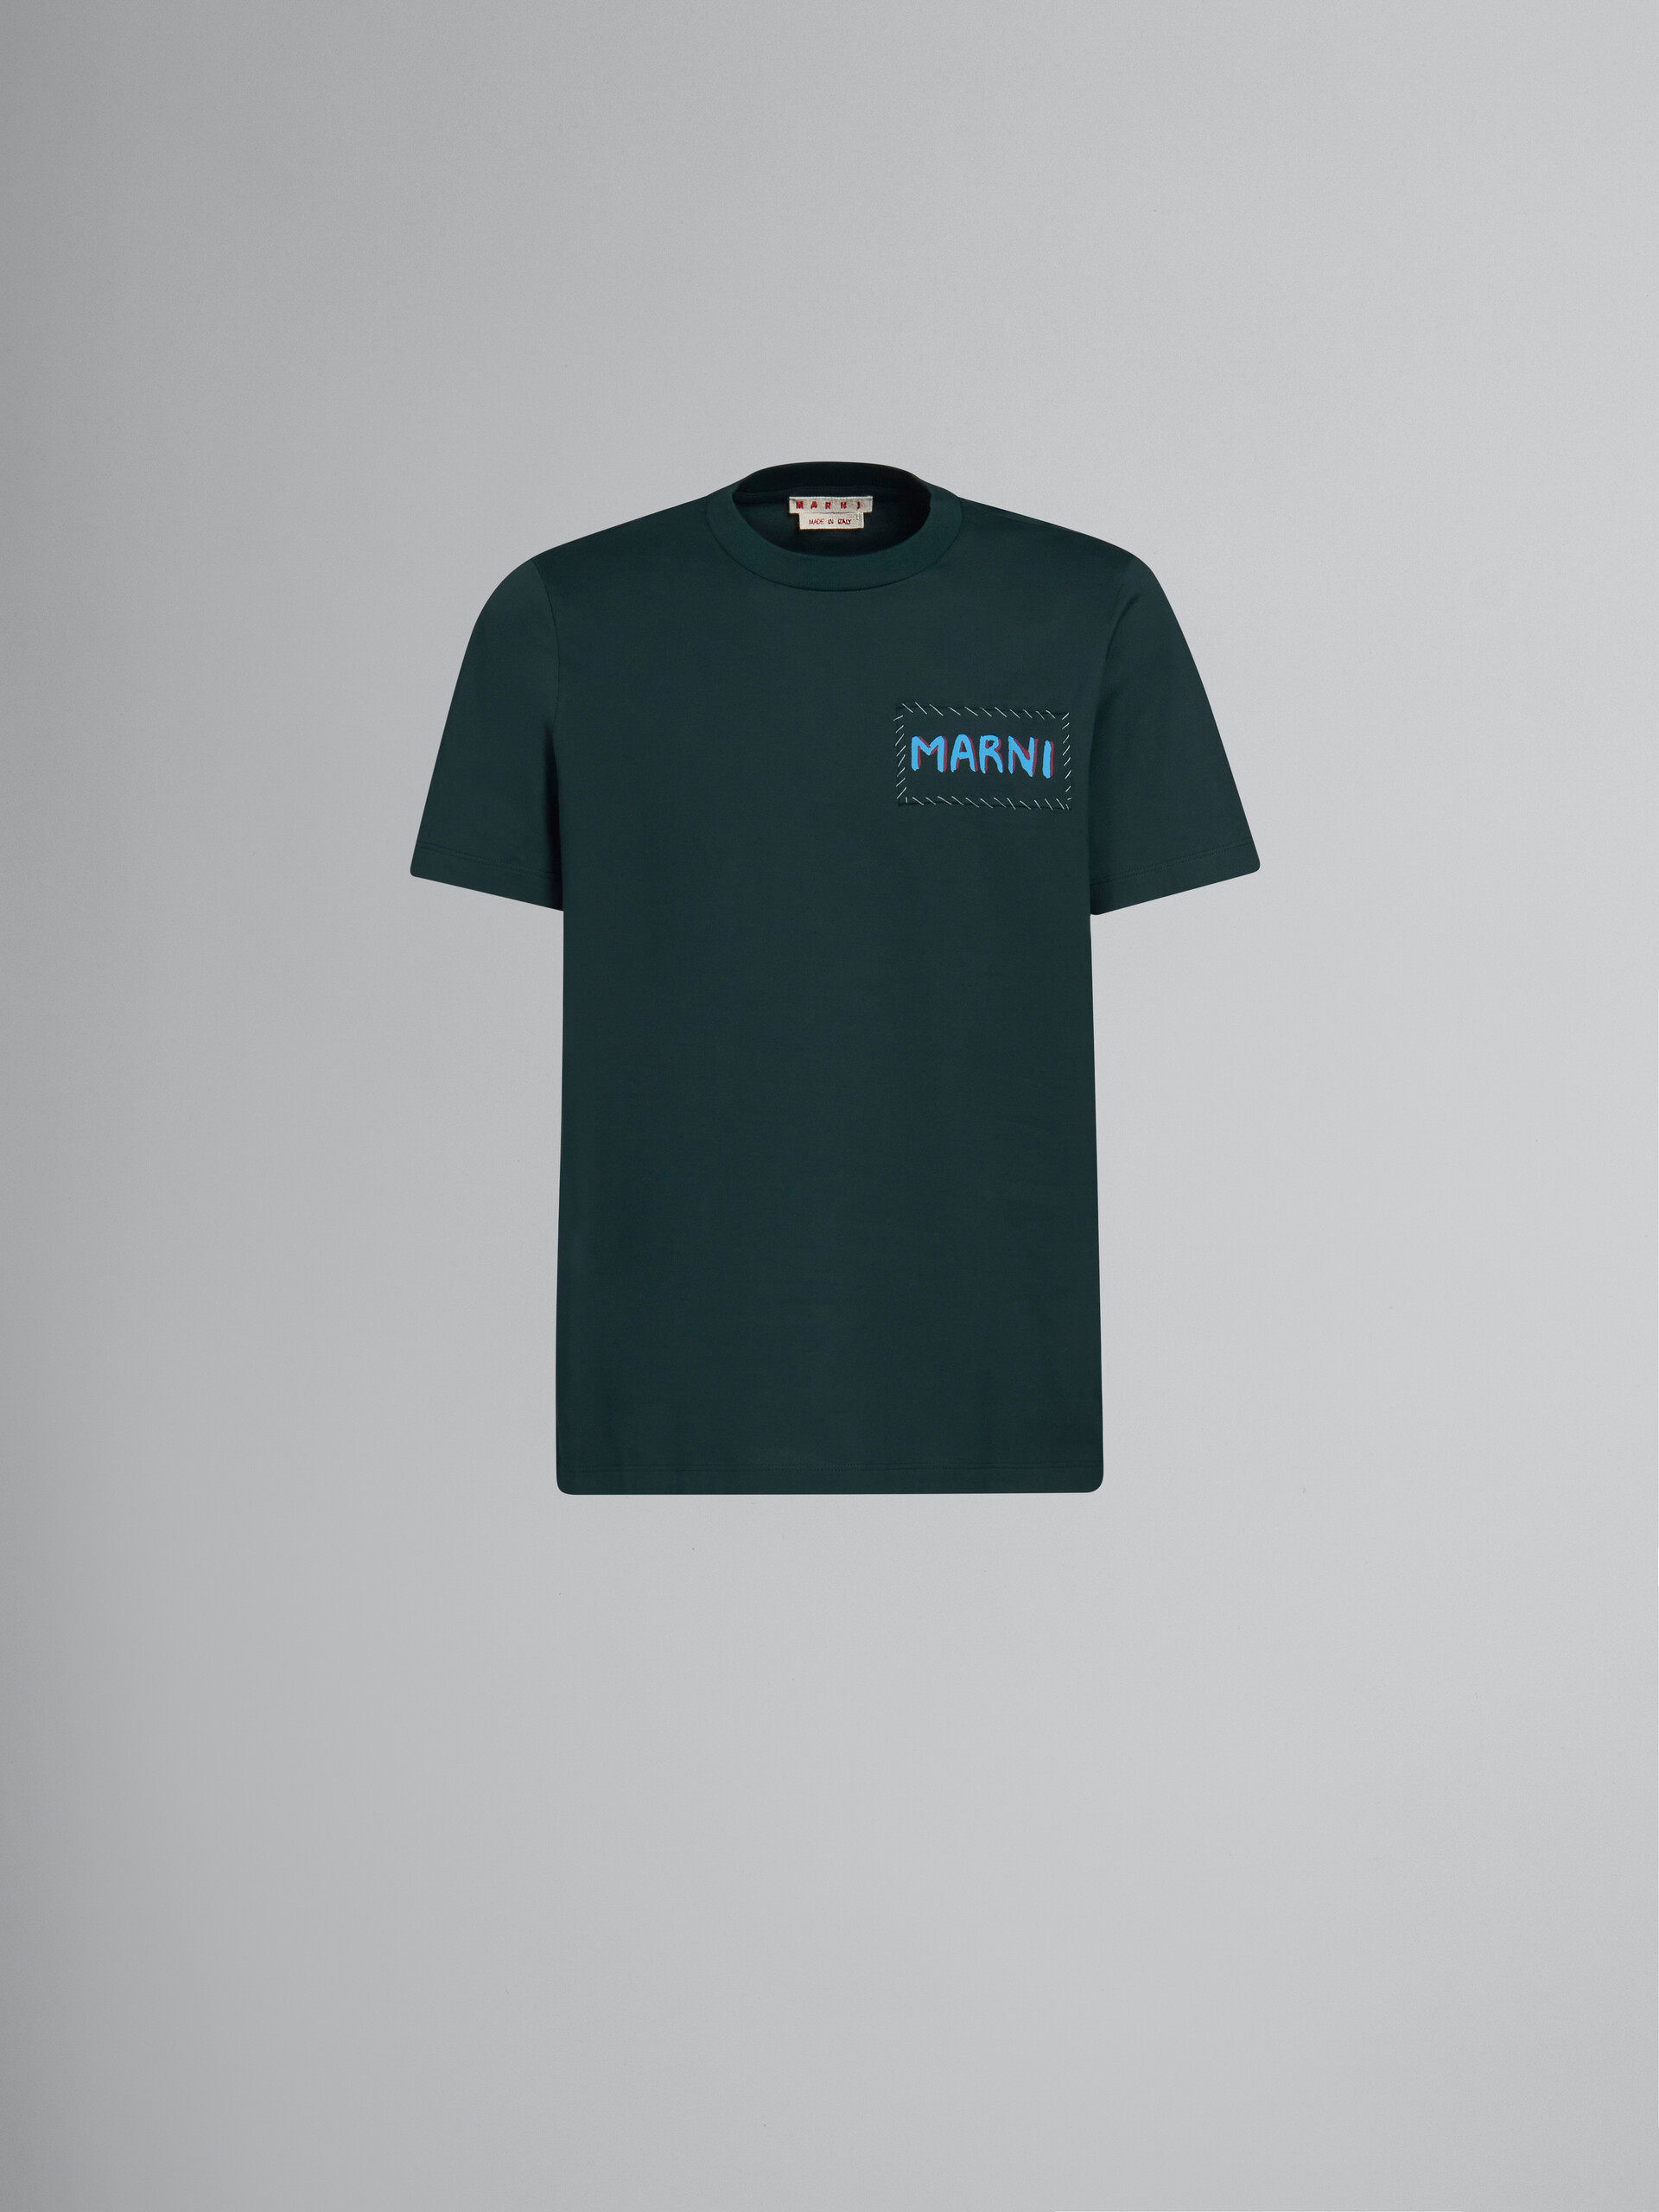 Green bio cotton T-shirt with Marni patch - T-shirts - Image 1